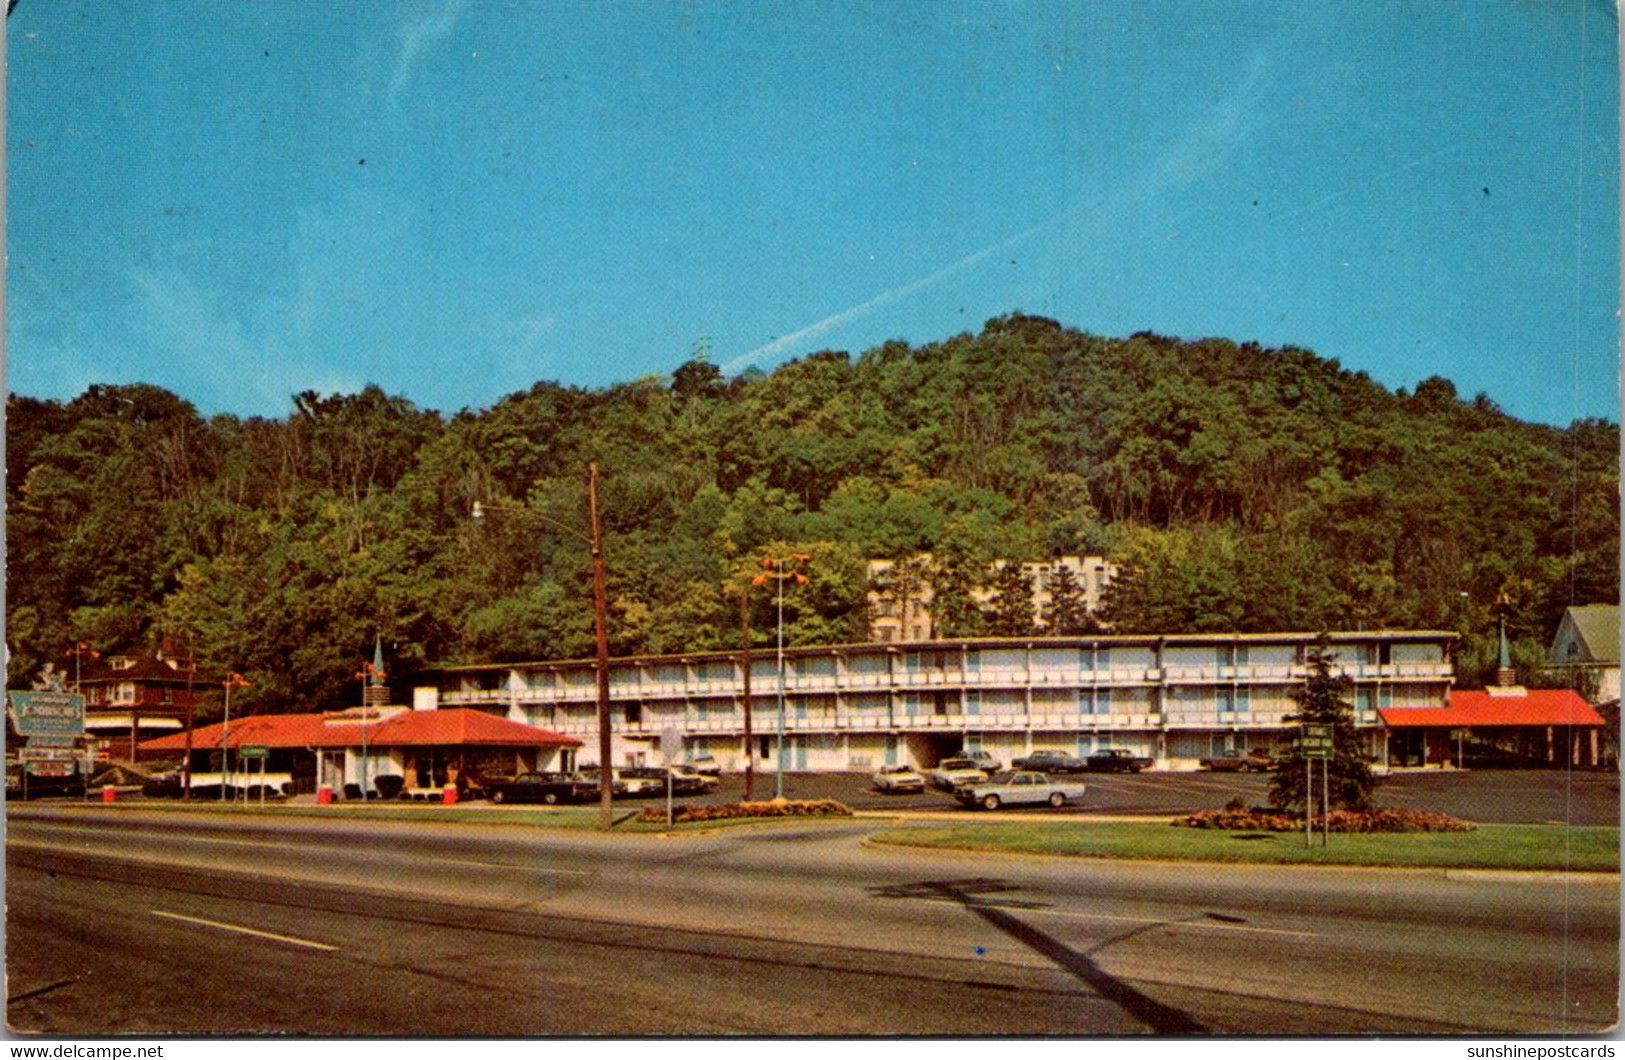 West Virginia Wheeling Howard Johnson's Motor Lodge And Restaurant - Wheeling